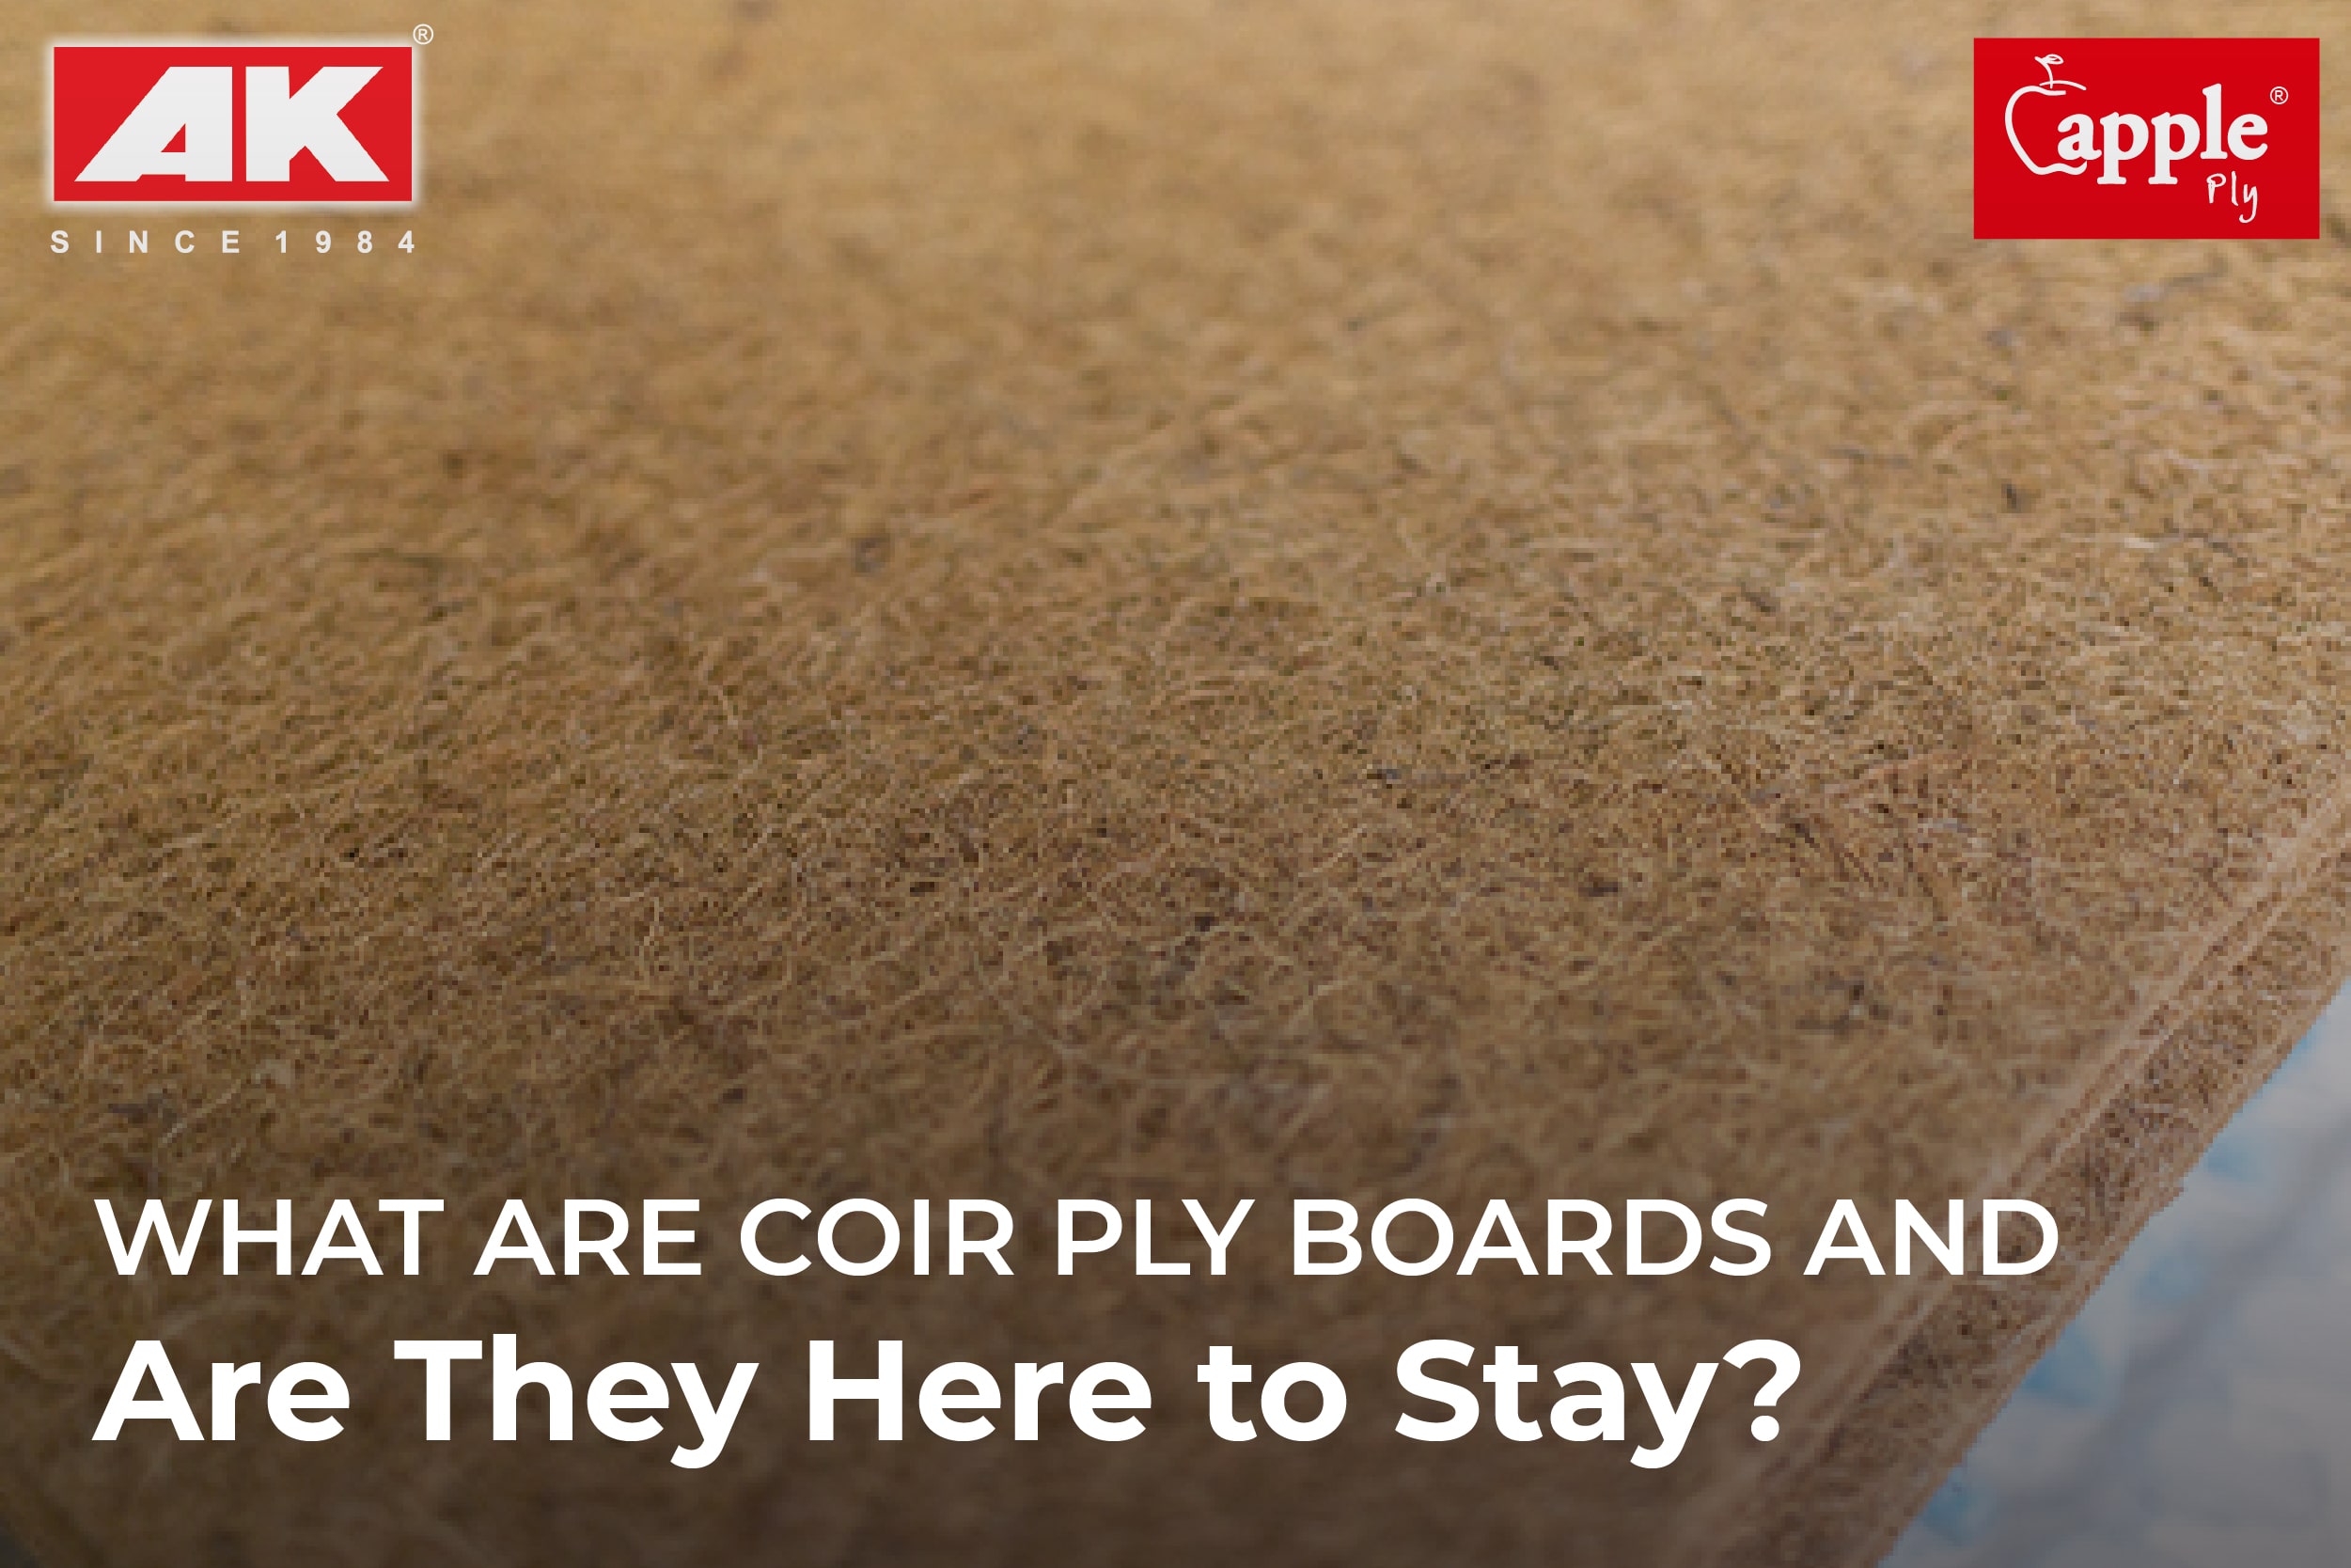 Coir Ply Boards